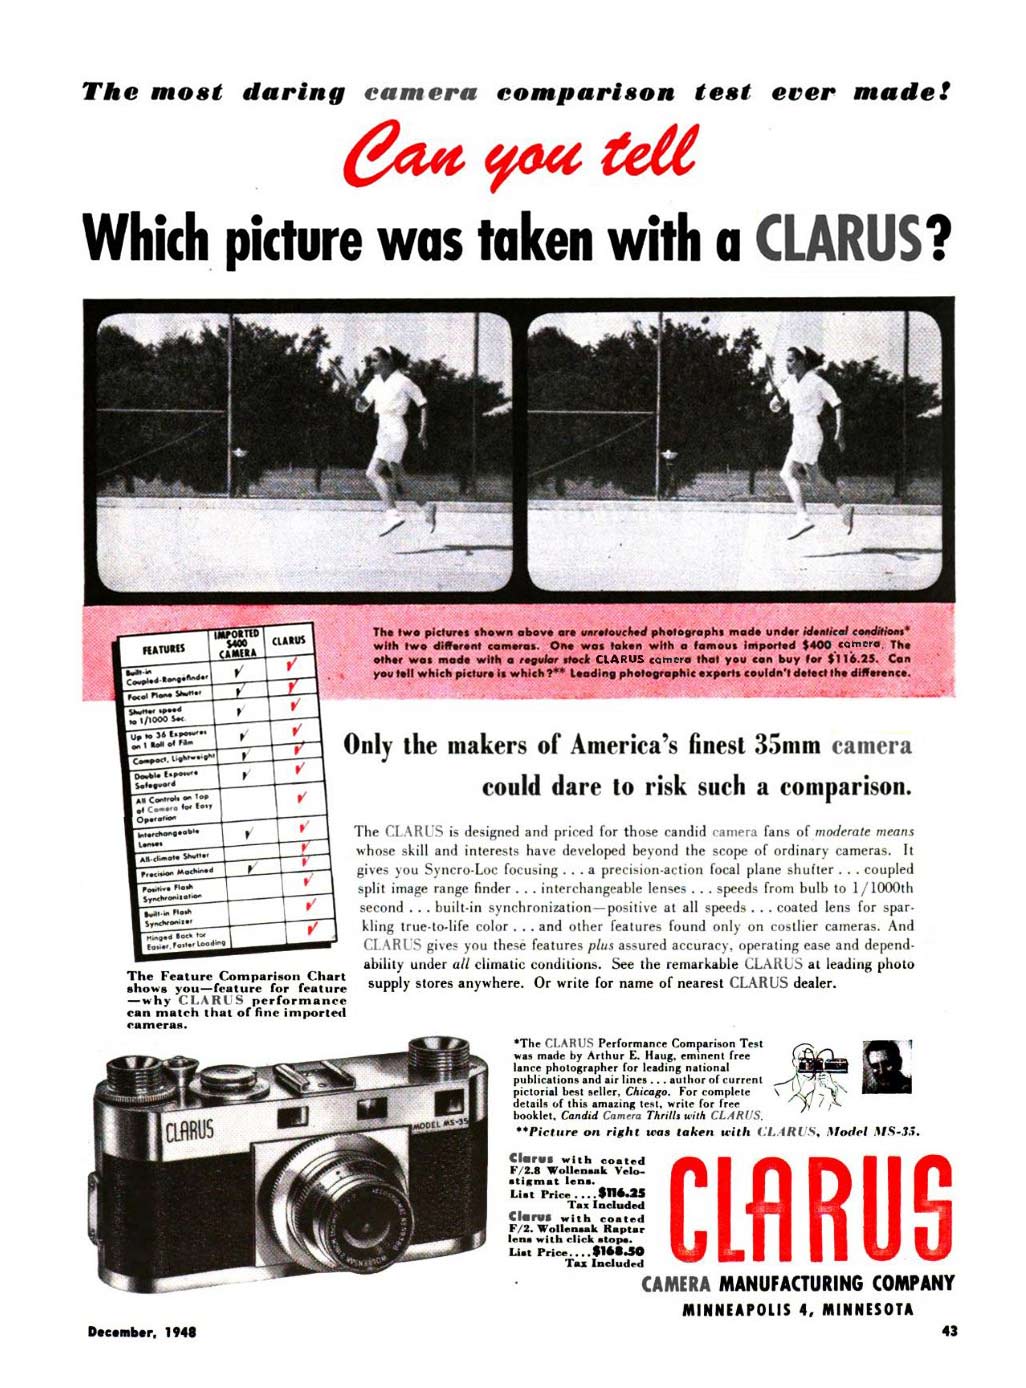 Clarus Model MS-35